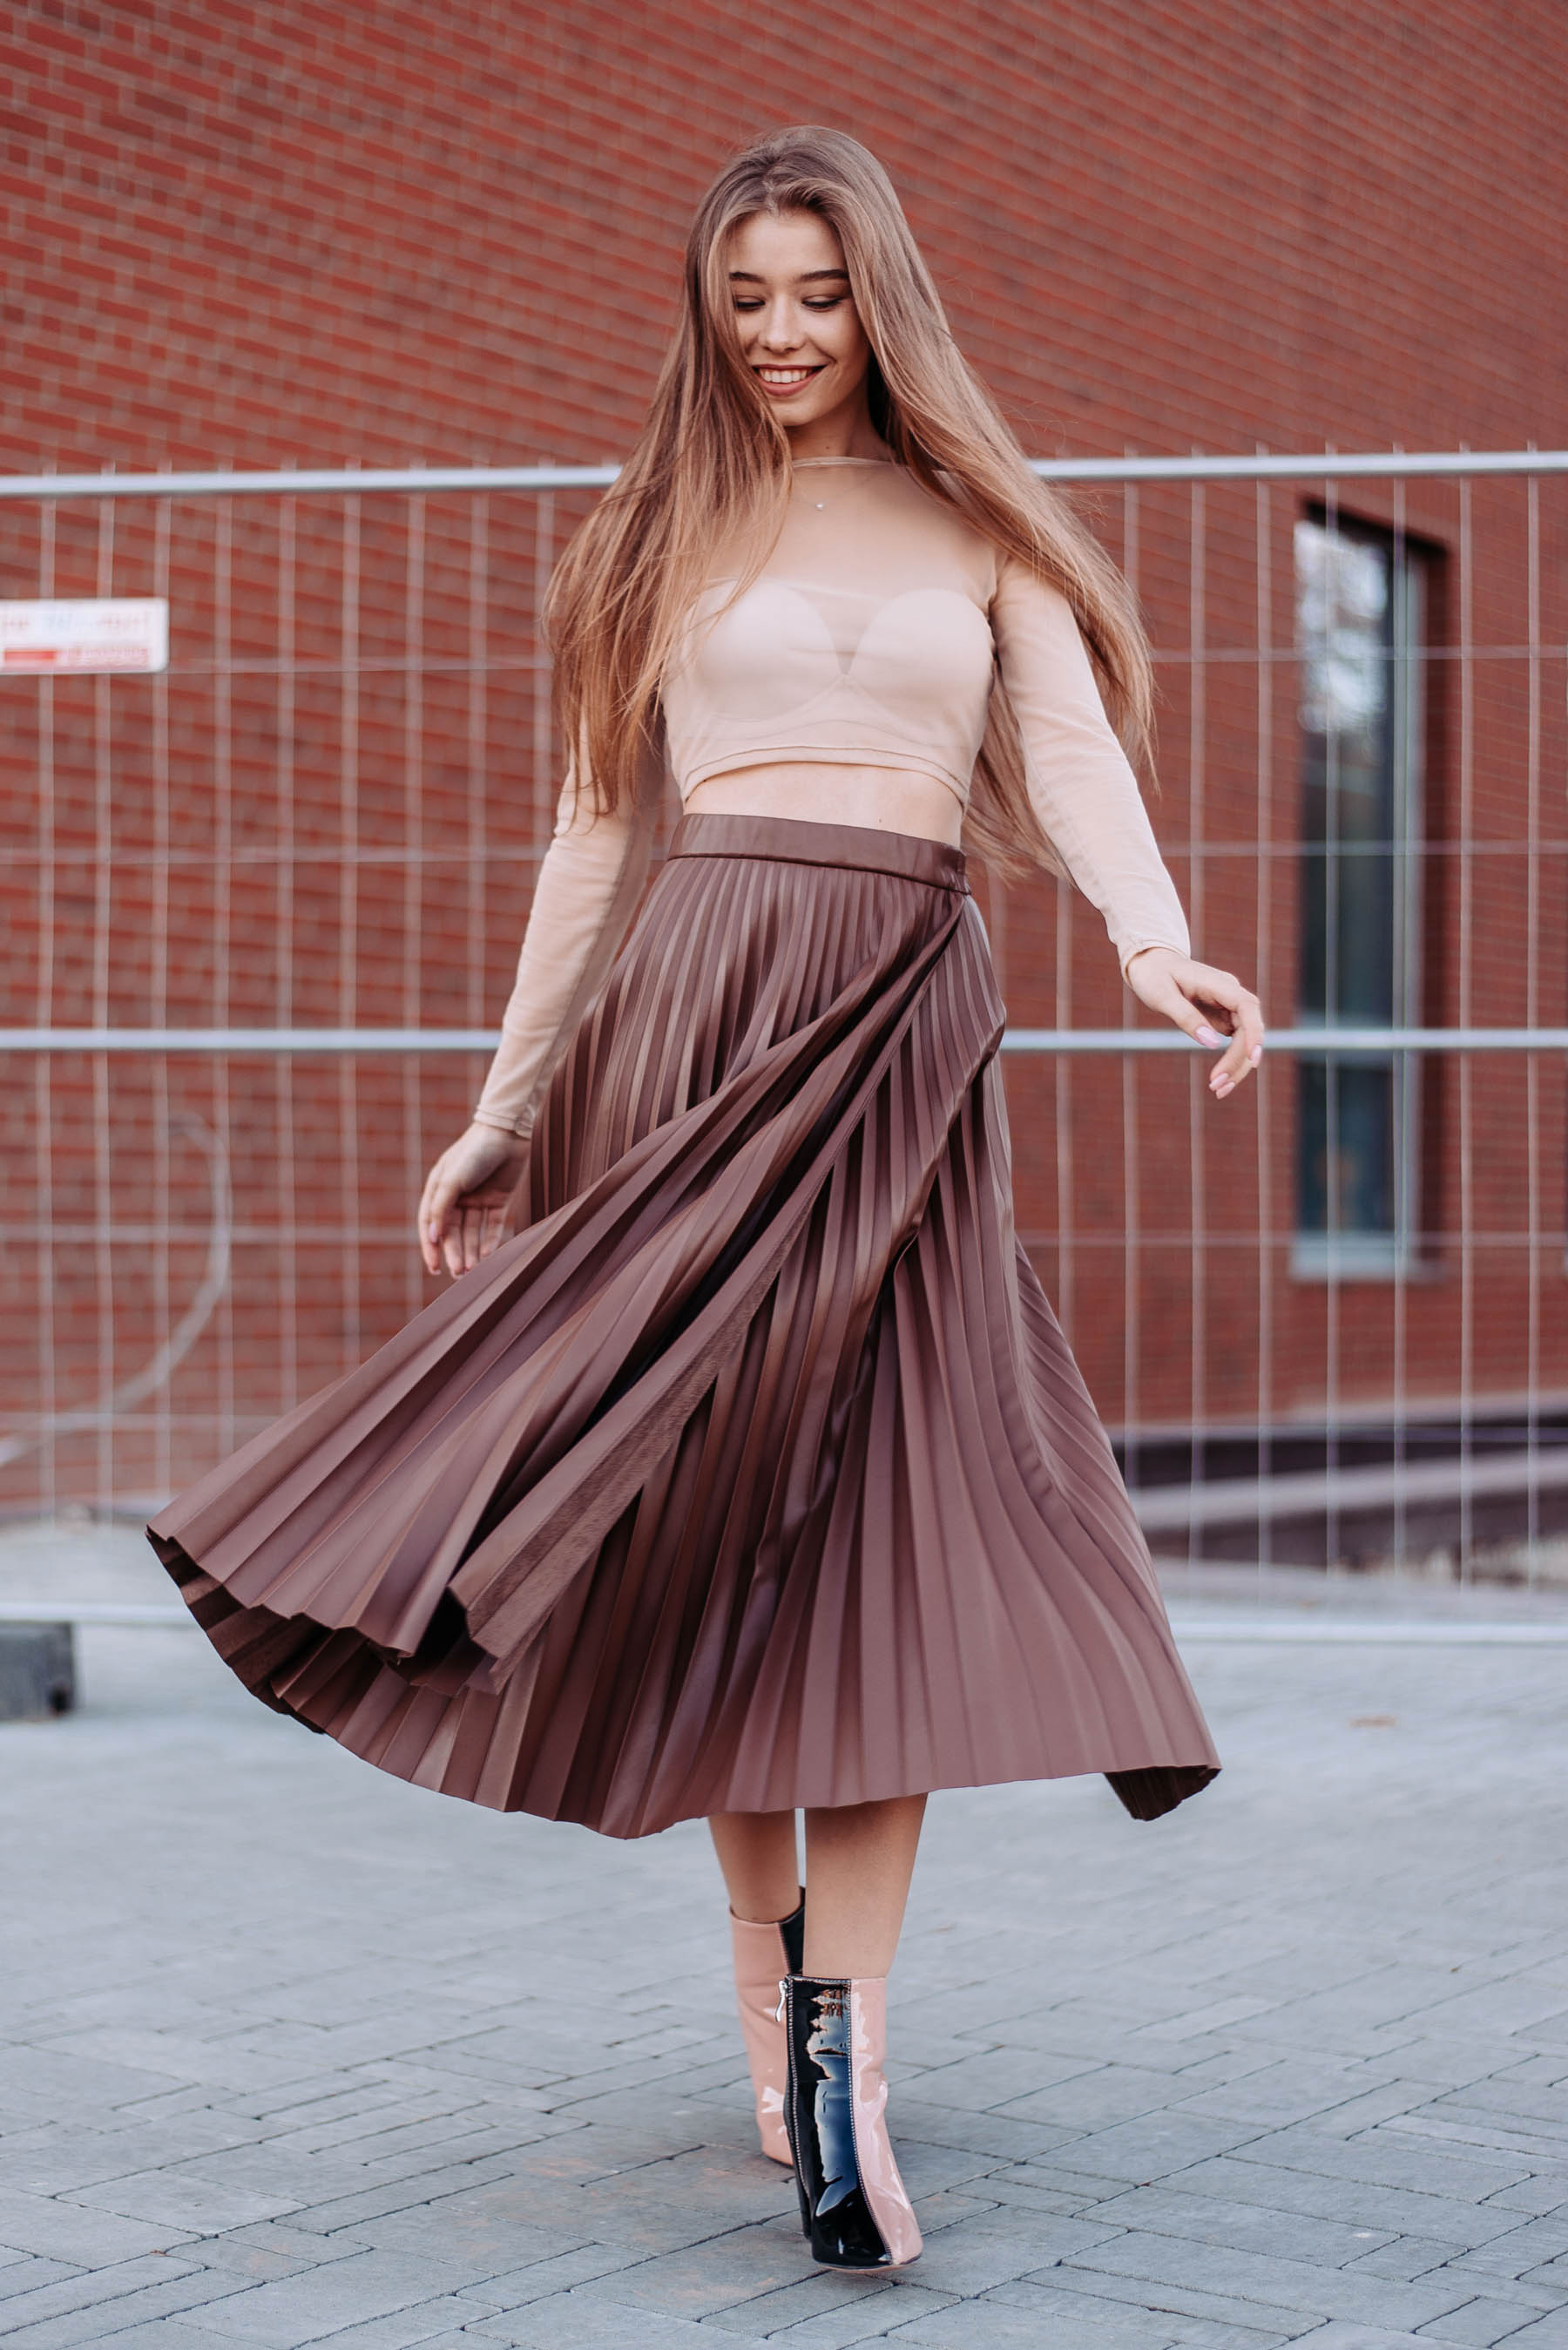  Eco-leather brown skirt photo 6